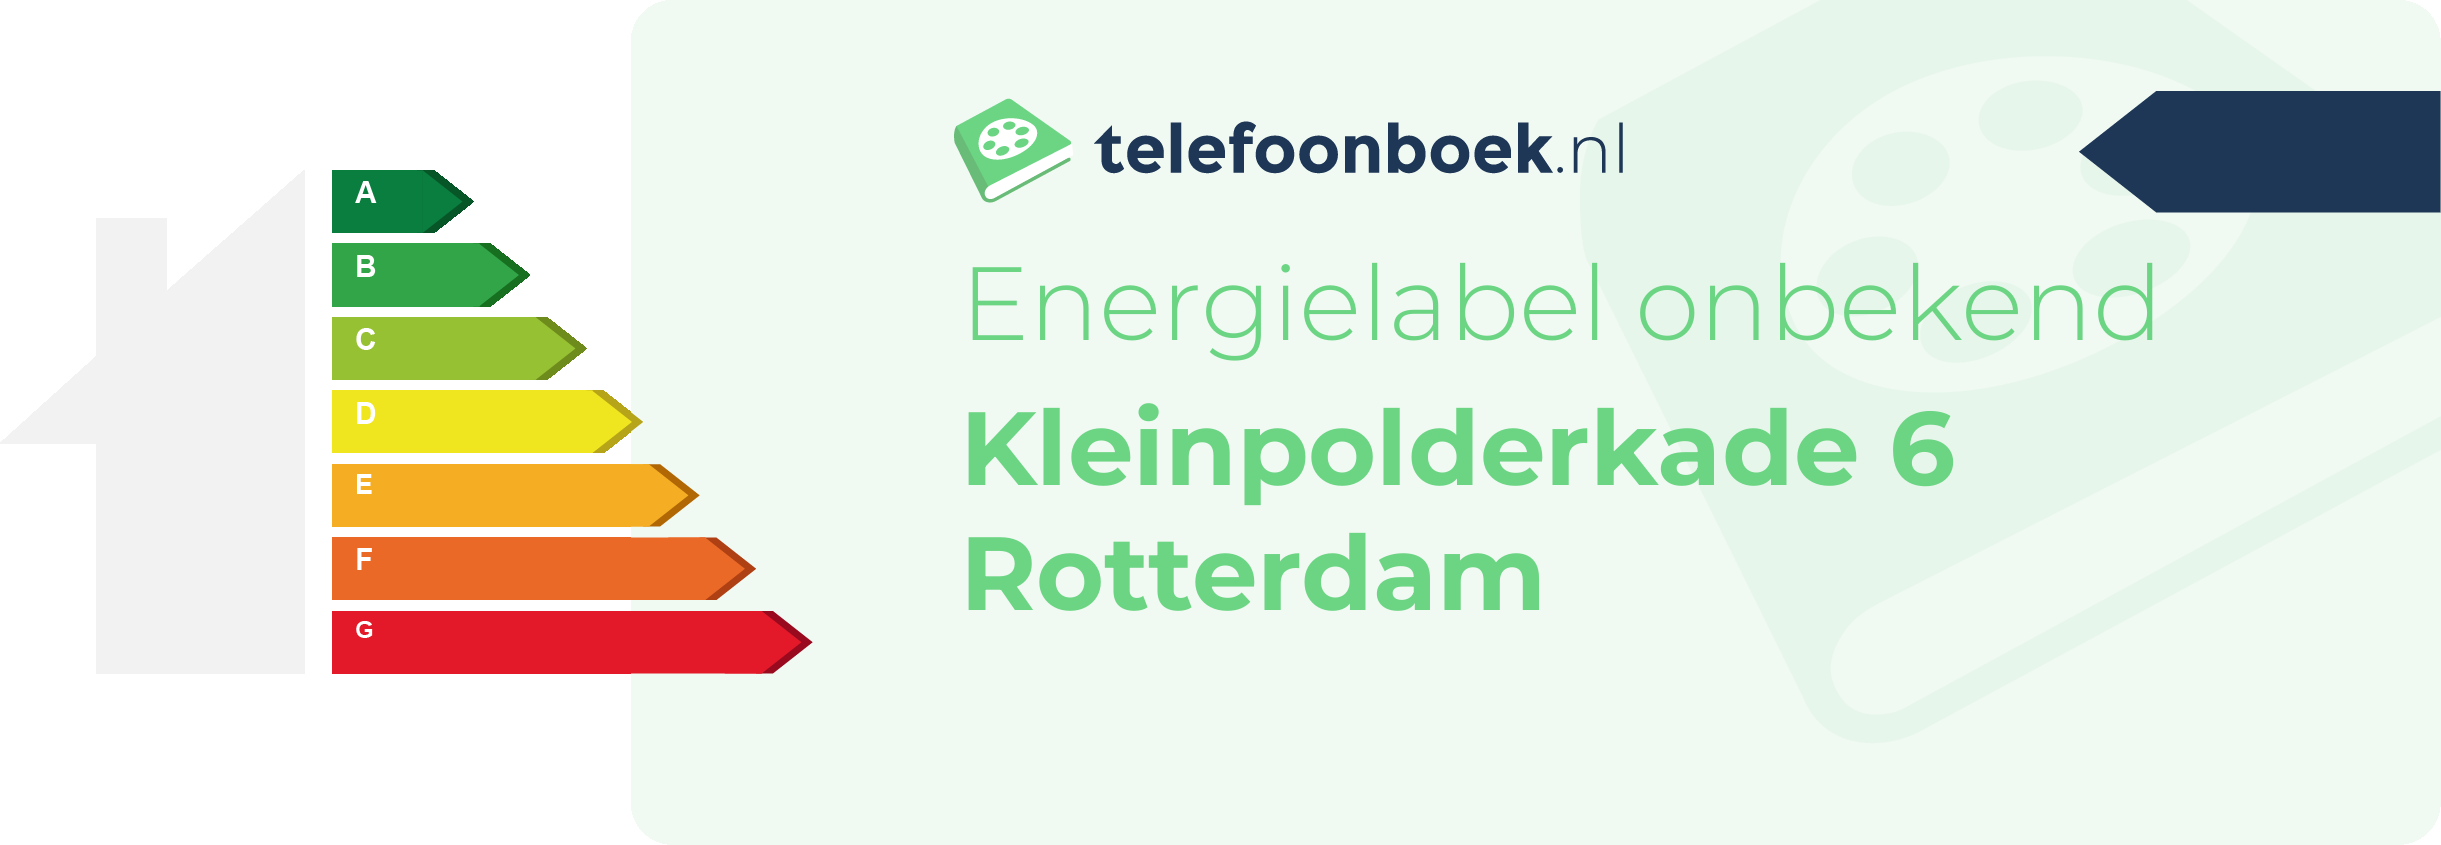 Energielabel Kleinpolderkade 6 Rotterdam